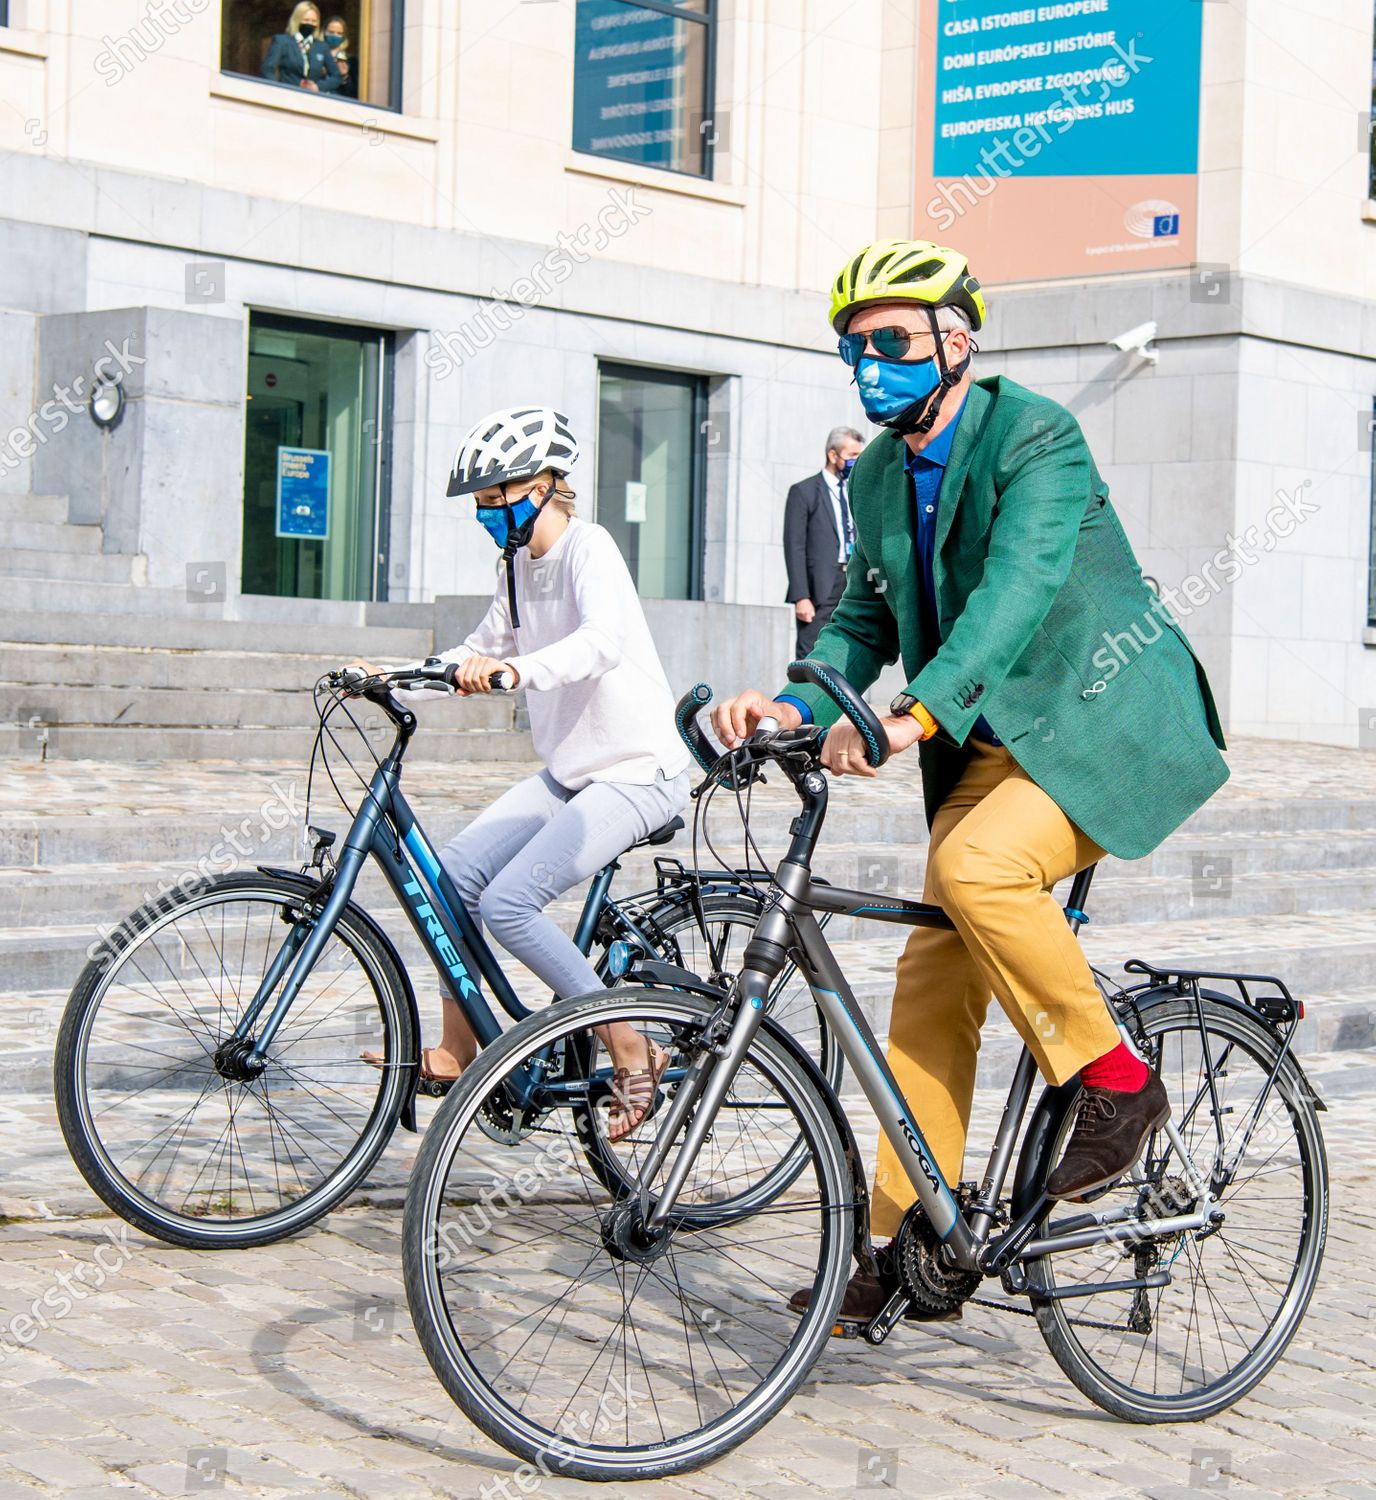 belgian-royals-cycle-on-car-free-sunday-brussels-belgium-shutterstock-editorial-10783150f.jpg